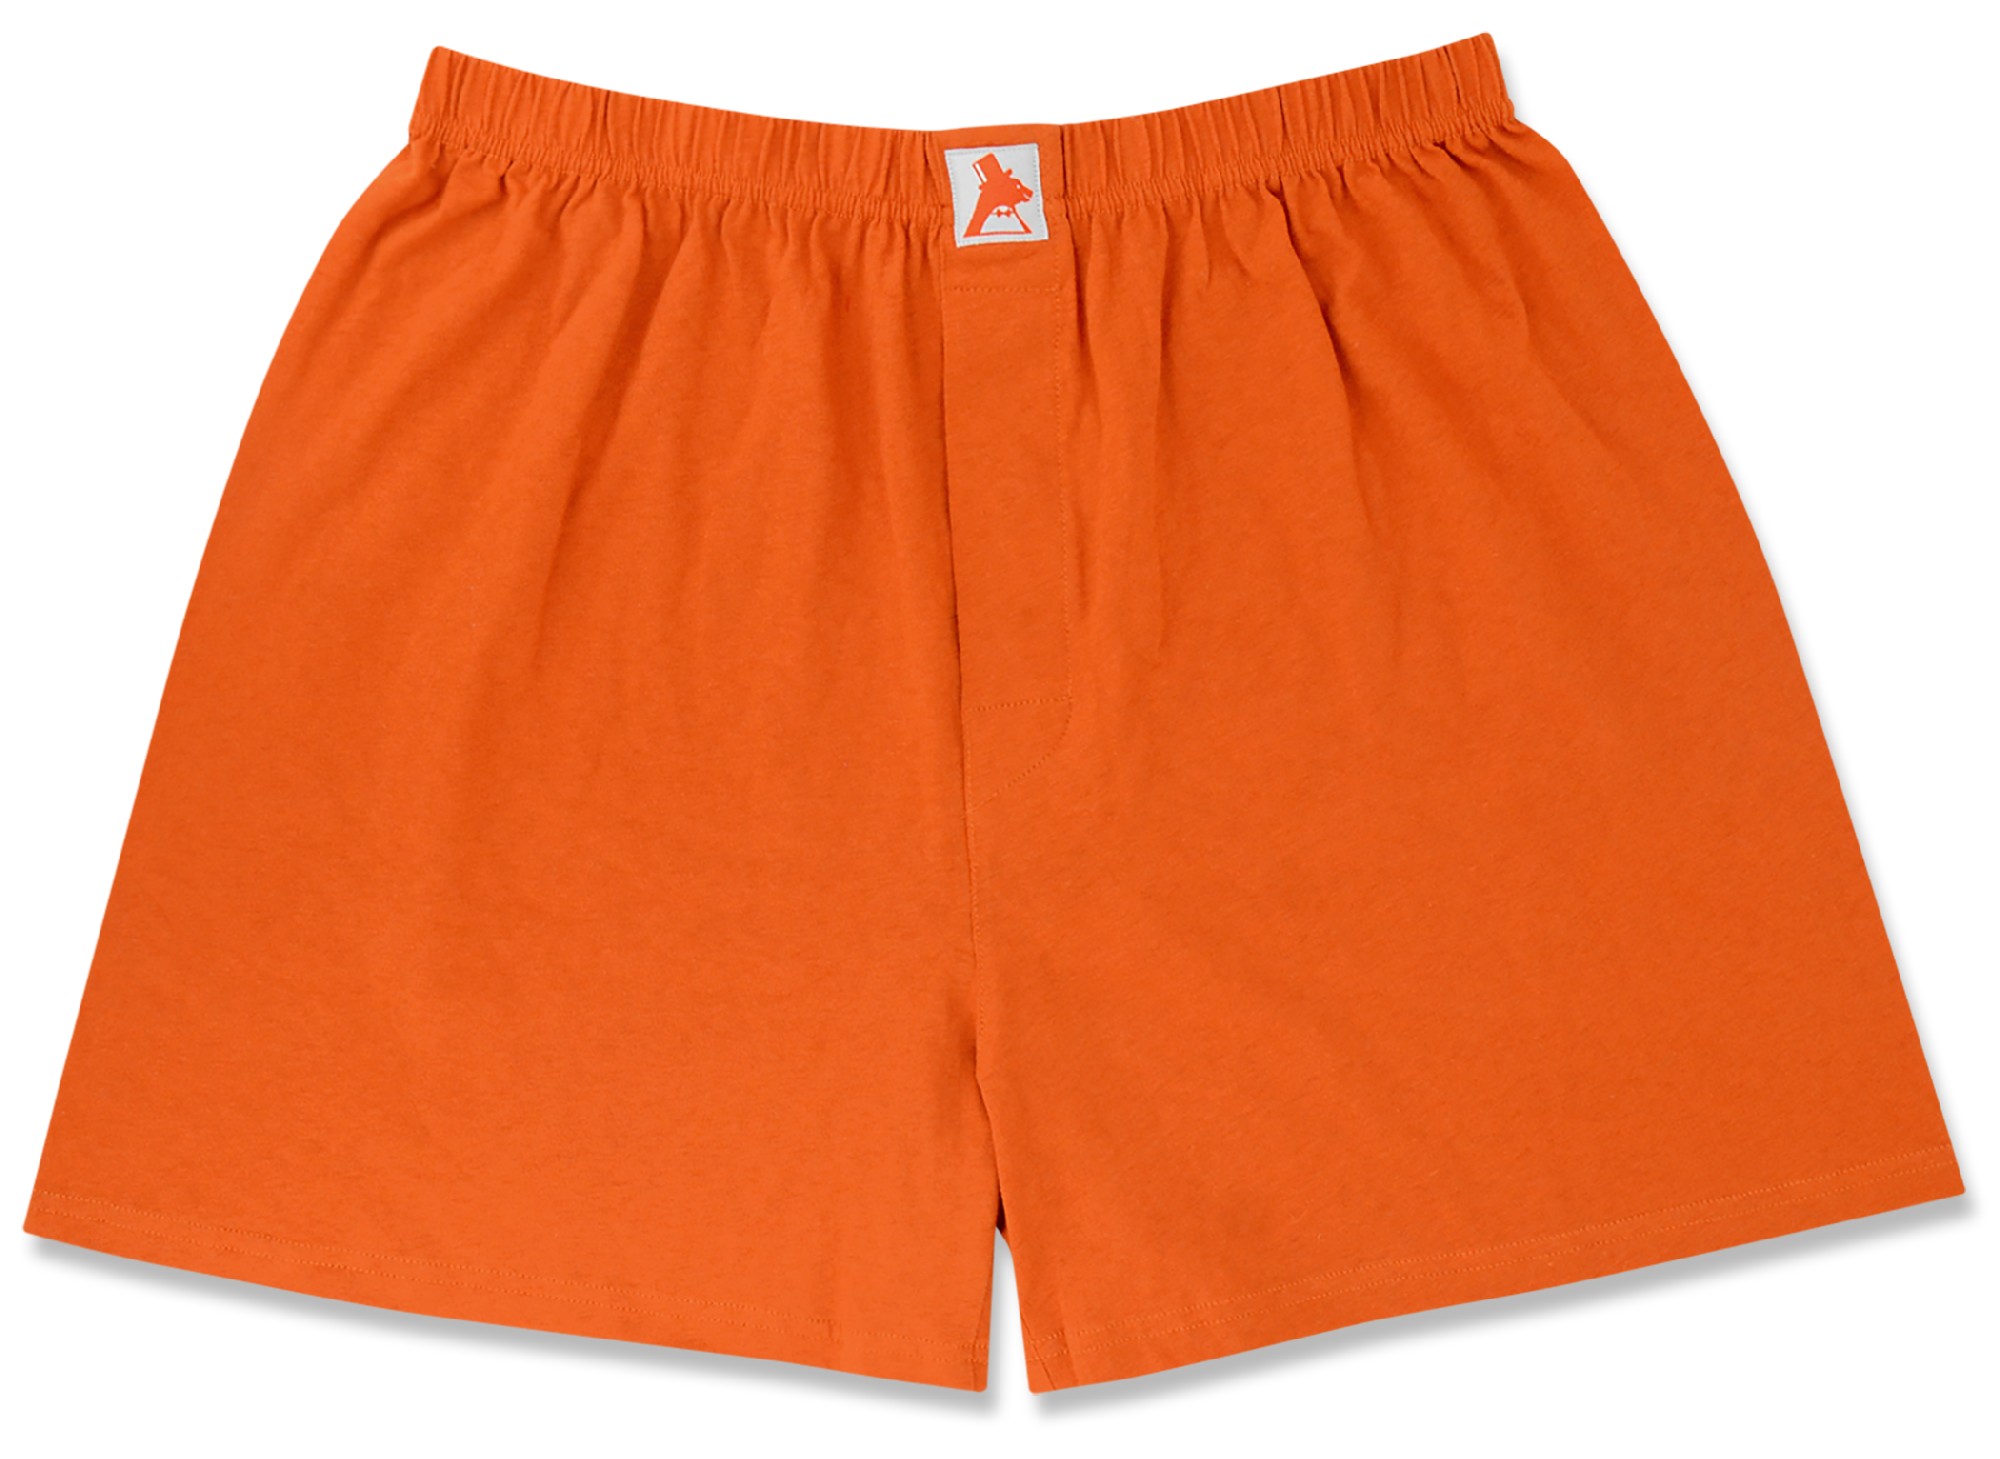 Biagio Mens Solid Dark Burnt Orange Color BOXER 100% Knit Cotton Shorts